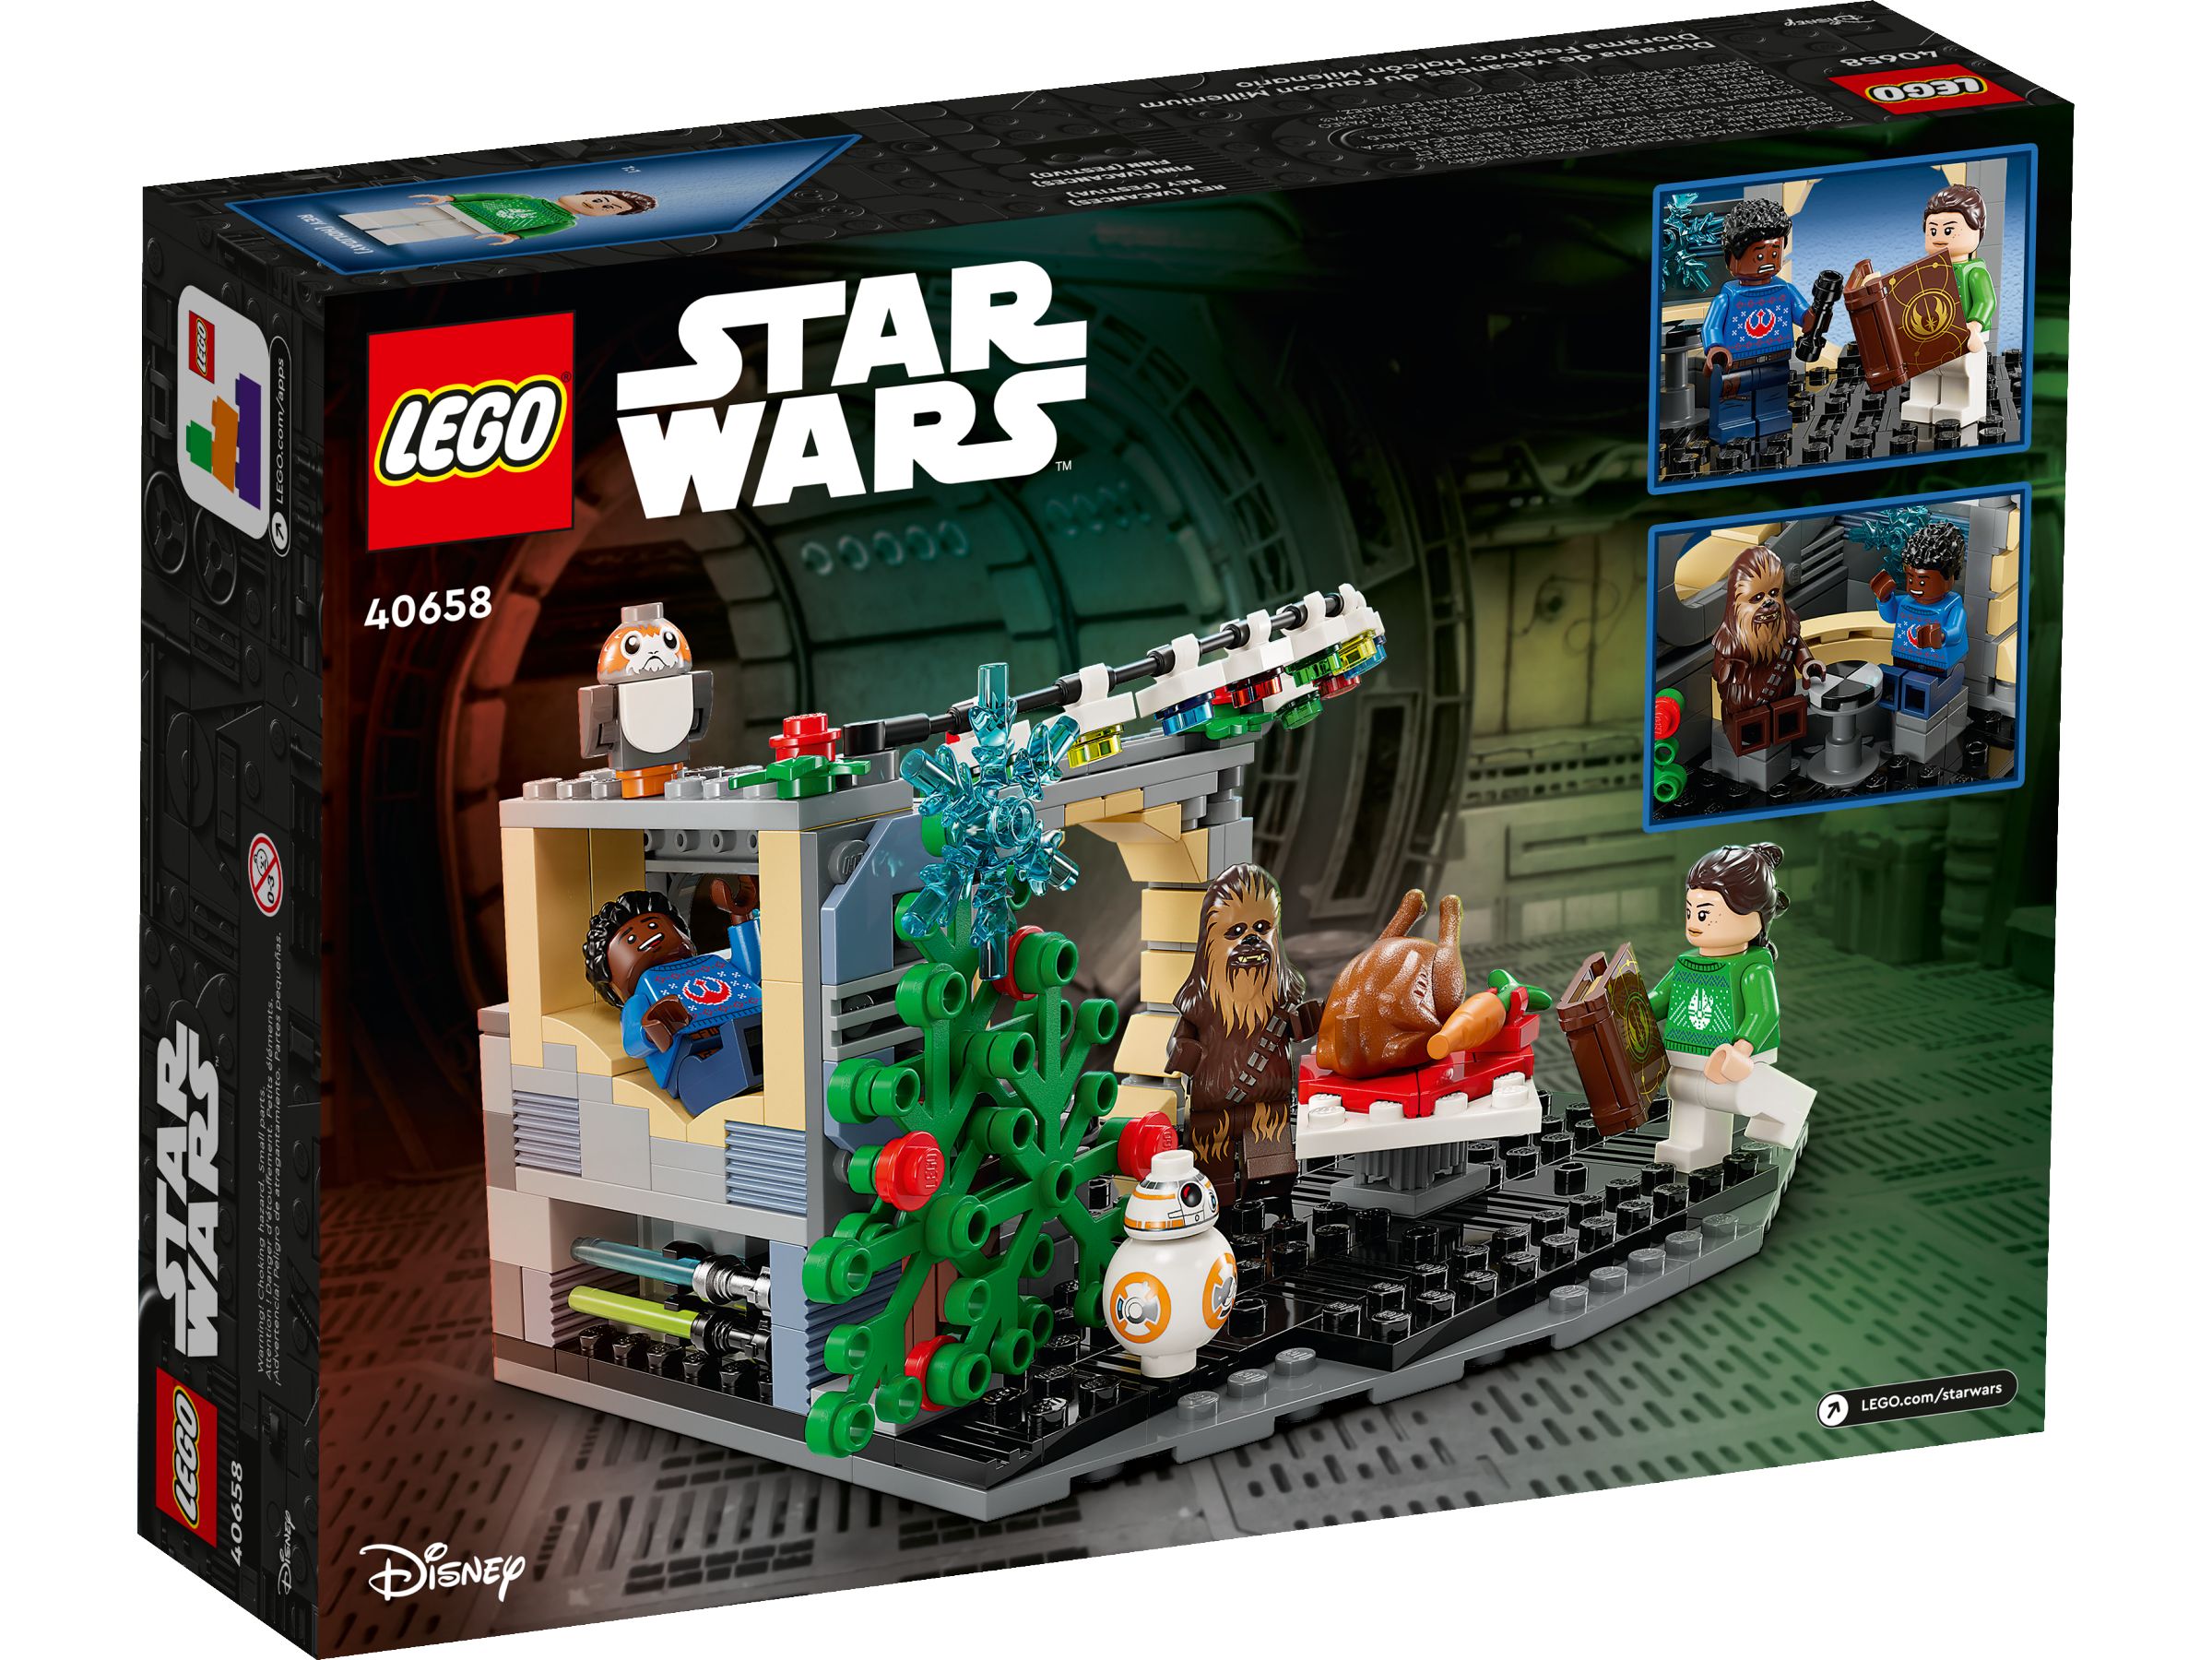 LEGO Star Wars 40658 Millennium Falcon™ – Weihnachtsdiorama LEGO_40658_alt2.jpg